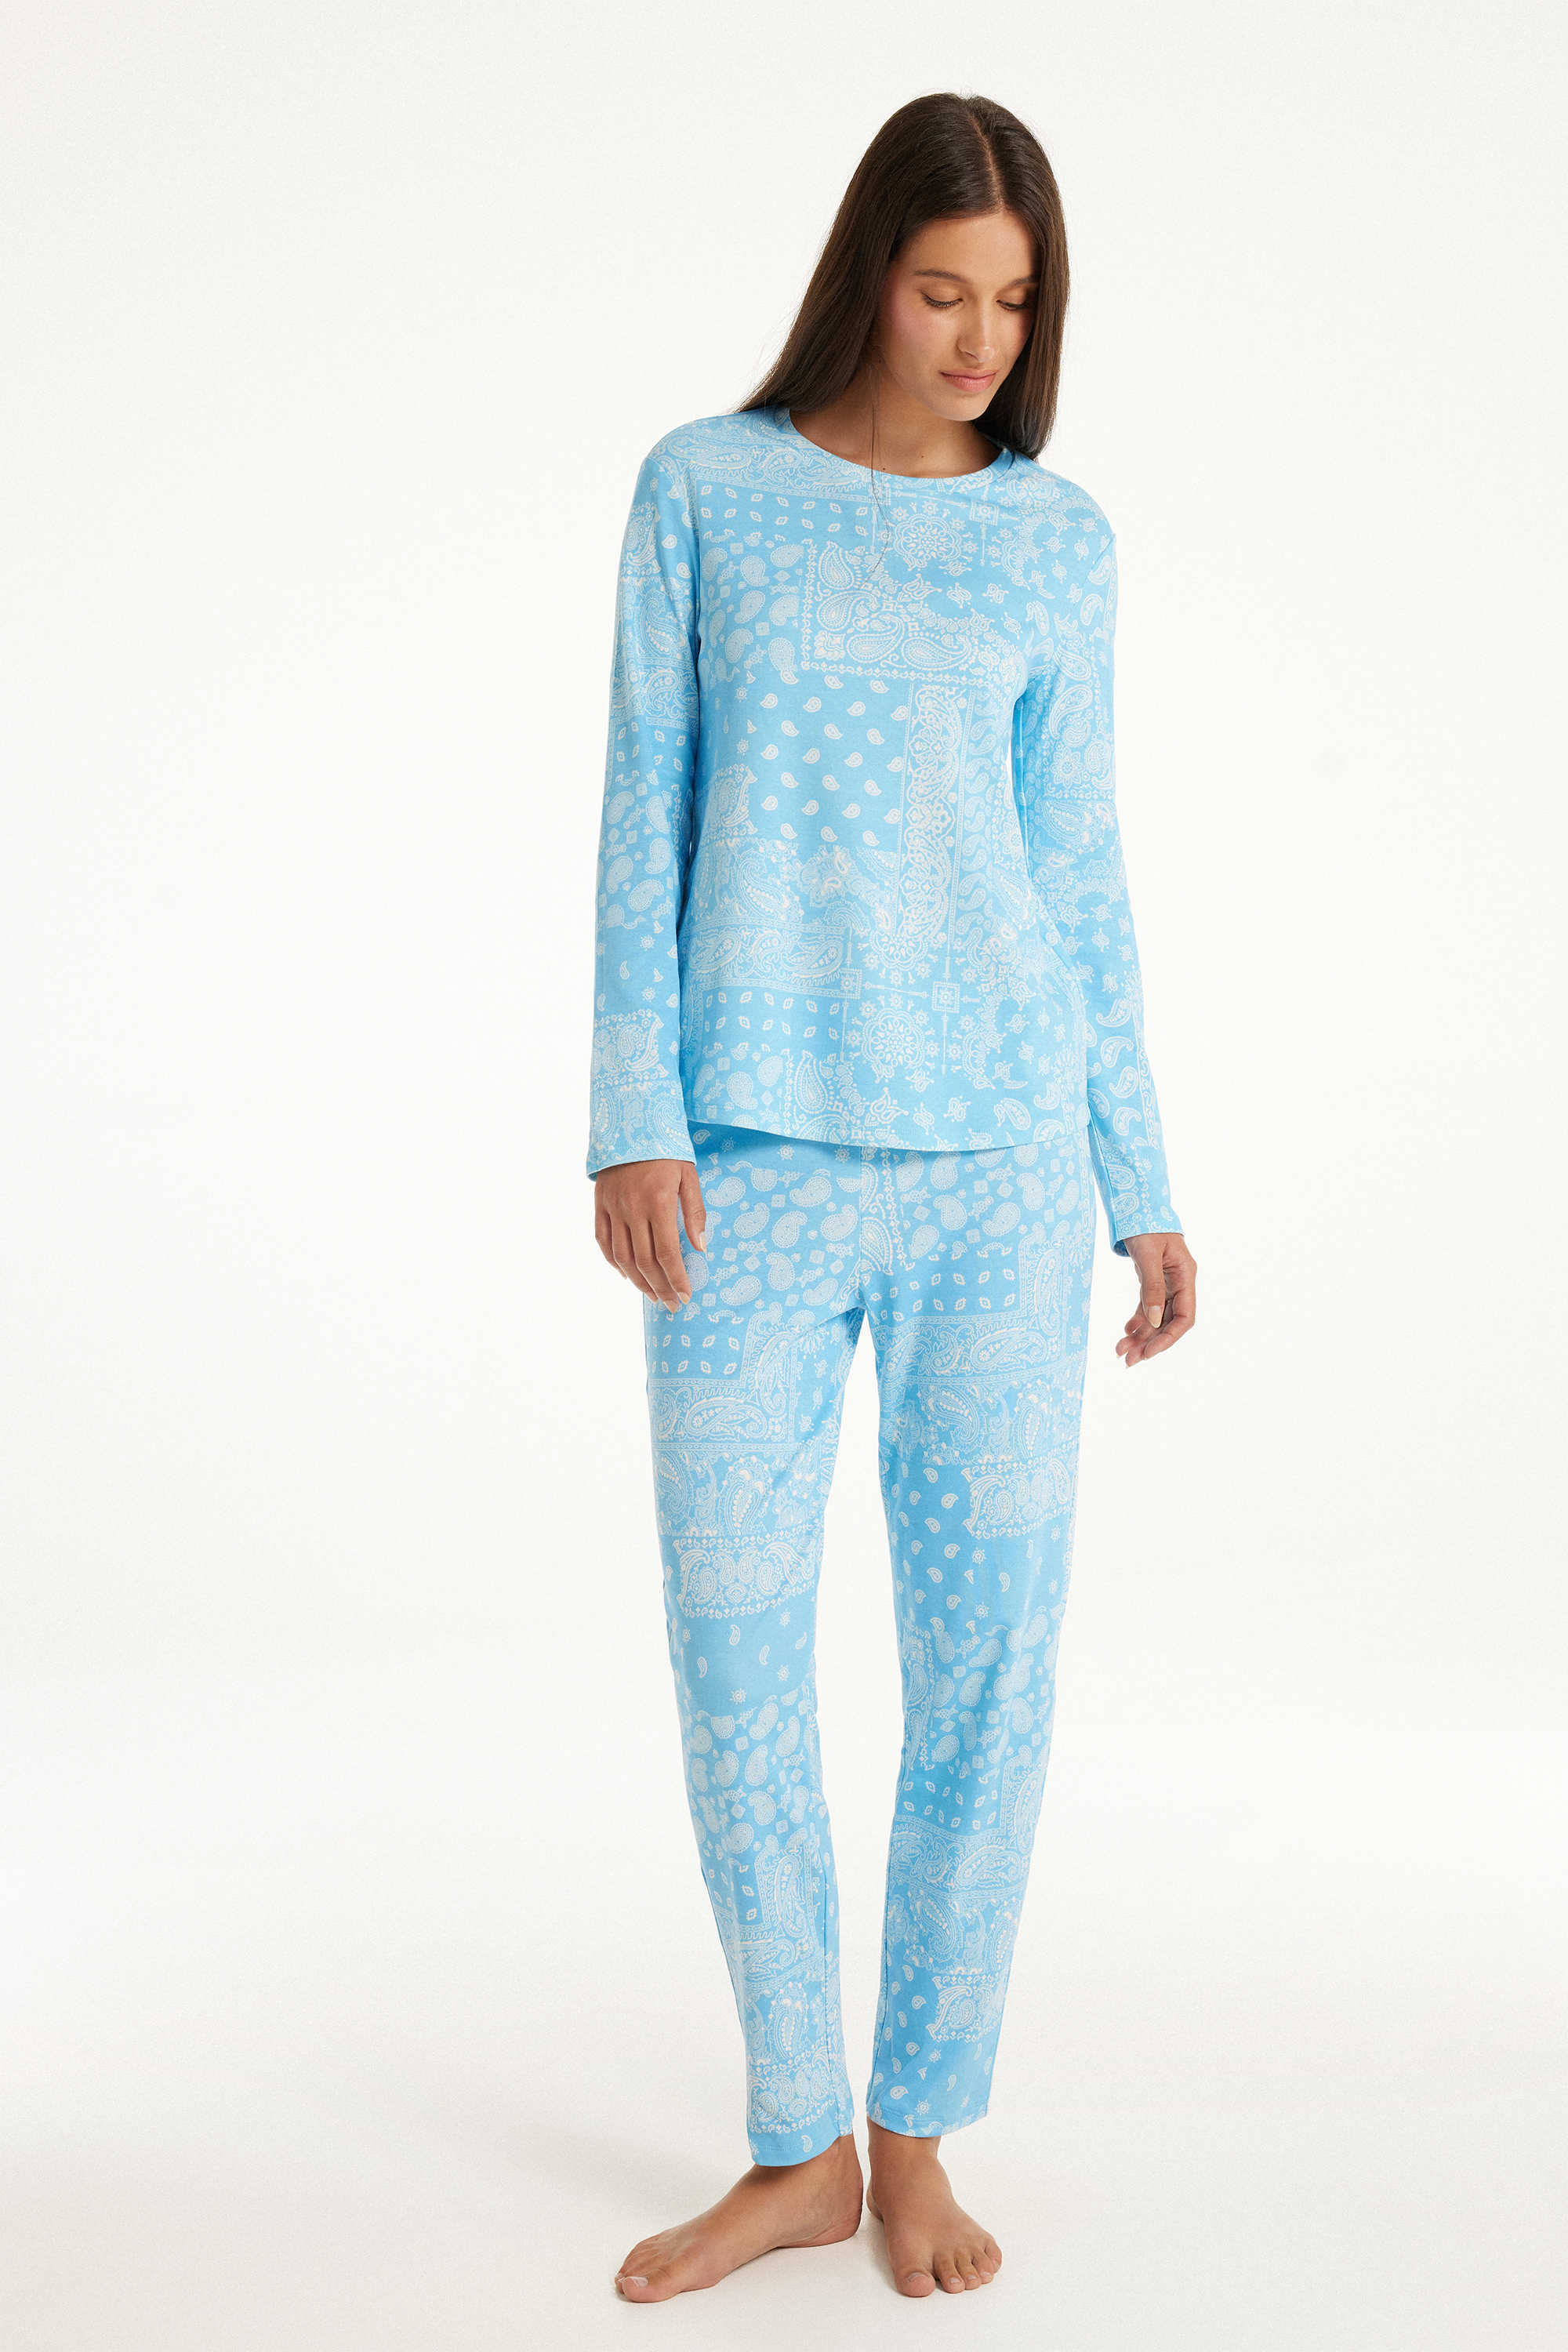 Langer Pyjama aus Baumwolle mit Bandanaprint